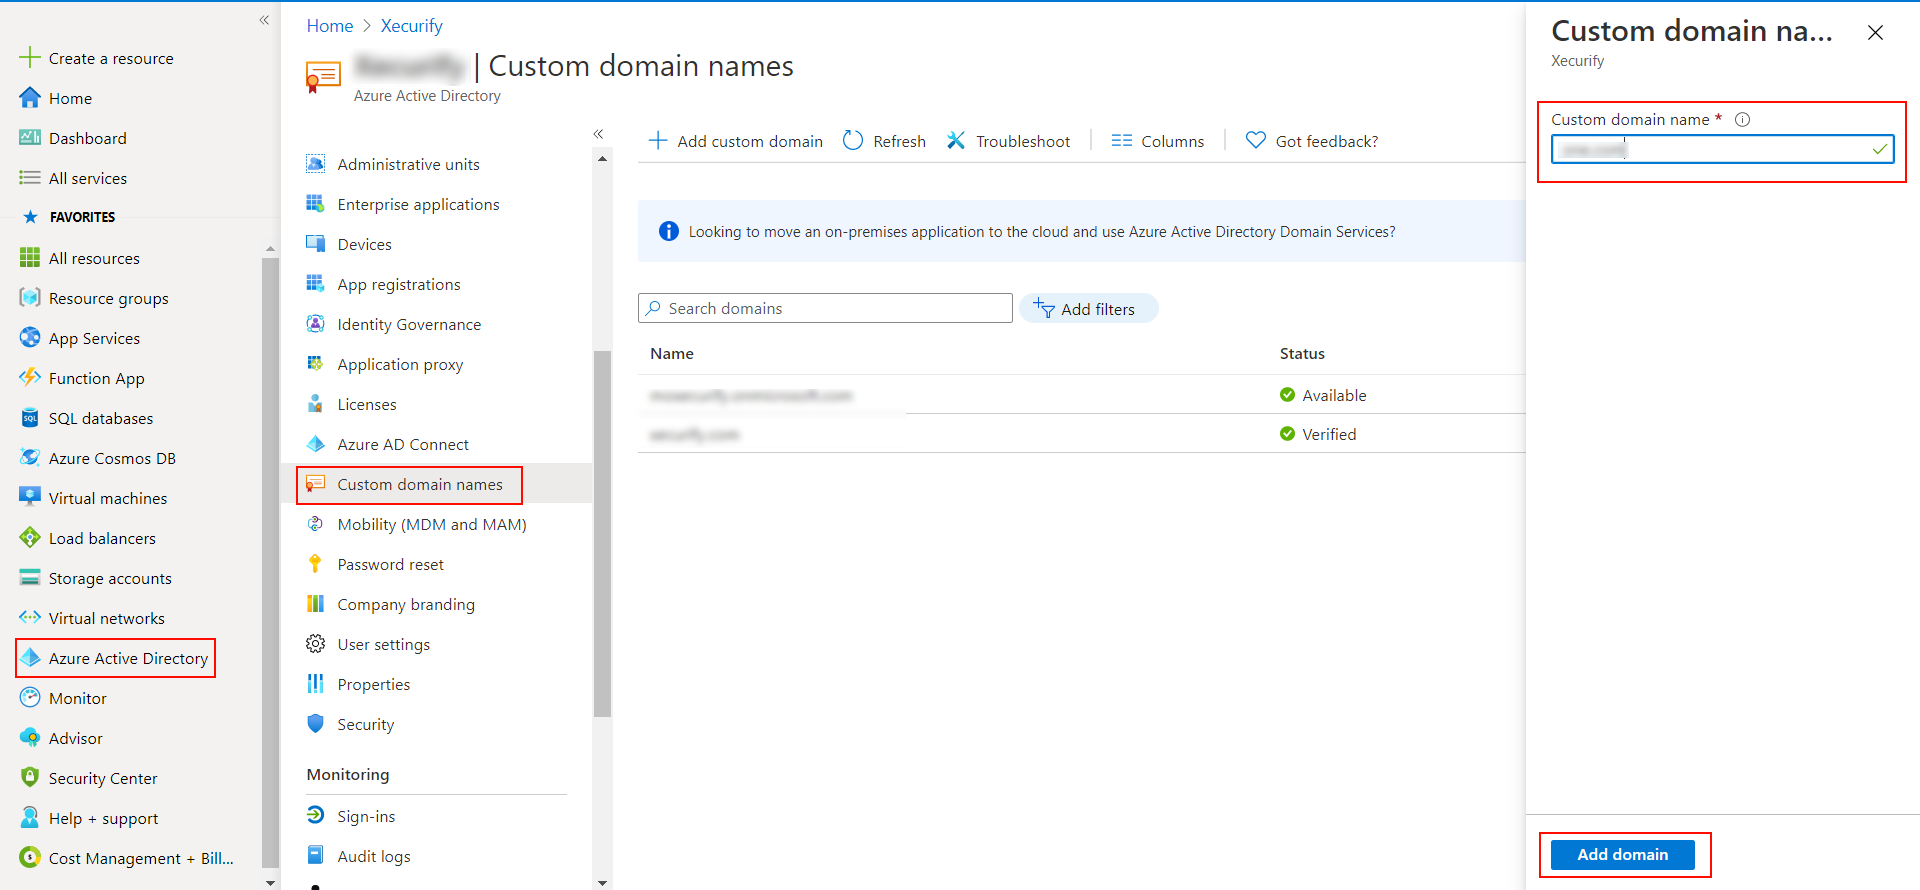  Microsoft OneDrive Single Sign-On (SSO) Add custom domain